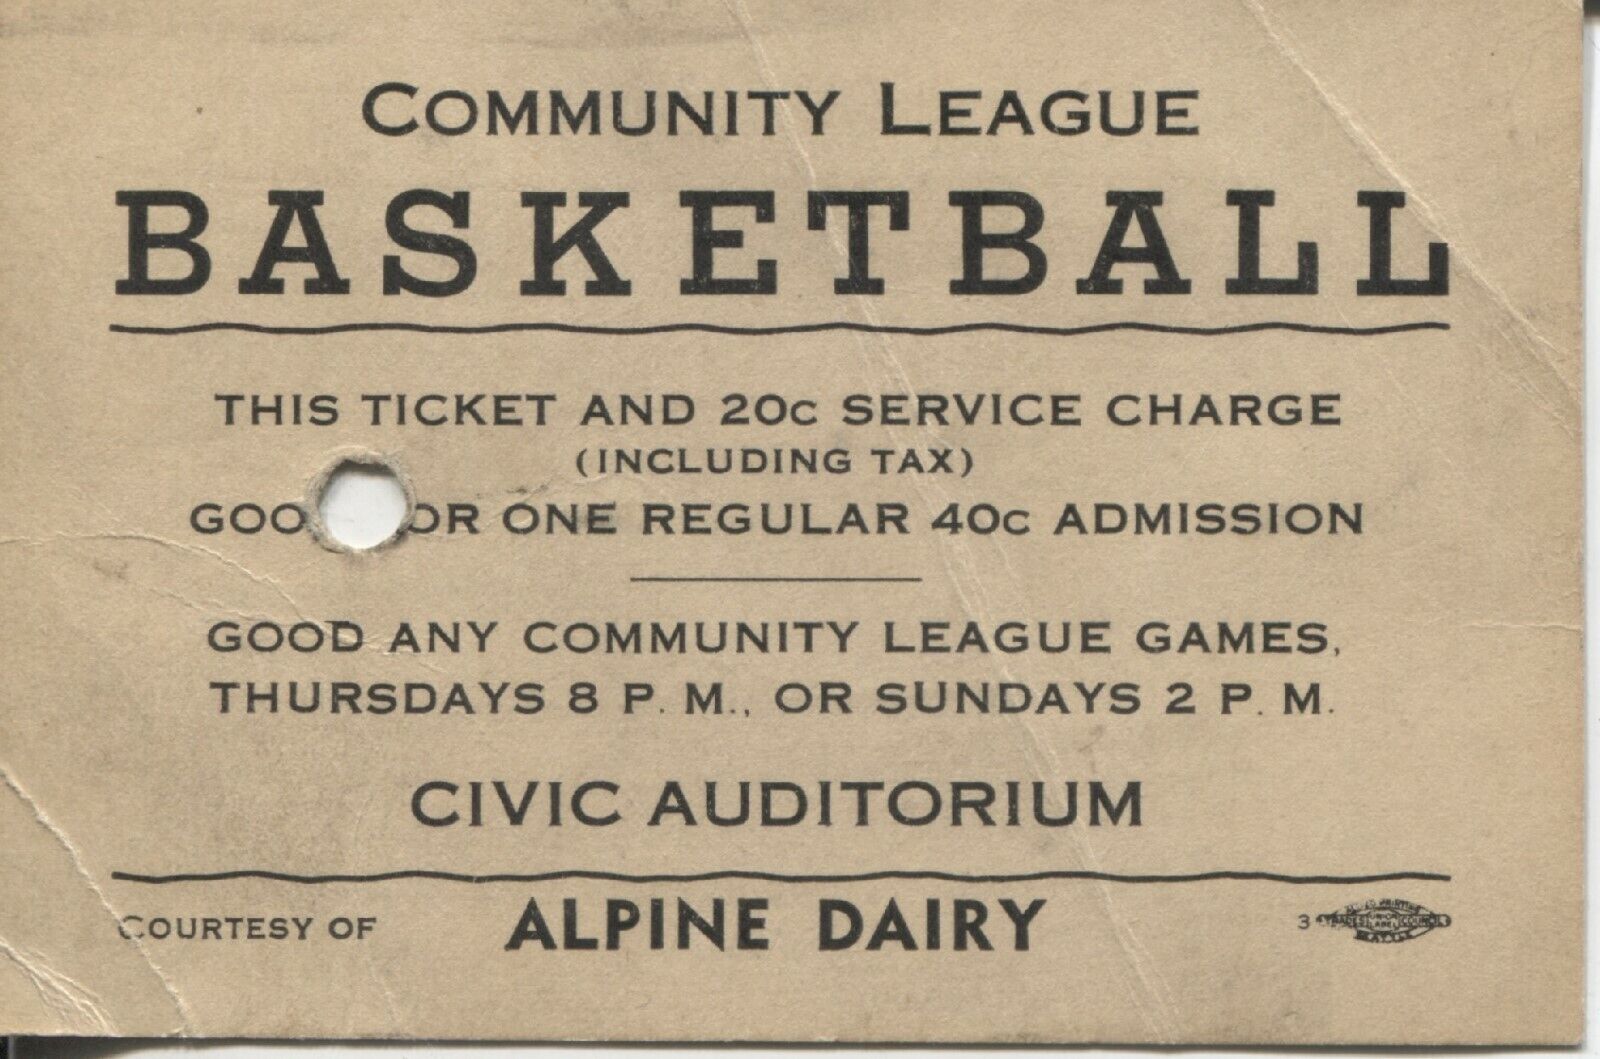 Basketball Ticket Community League Sponsored by Alpine Dairy Seattle